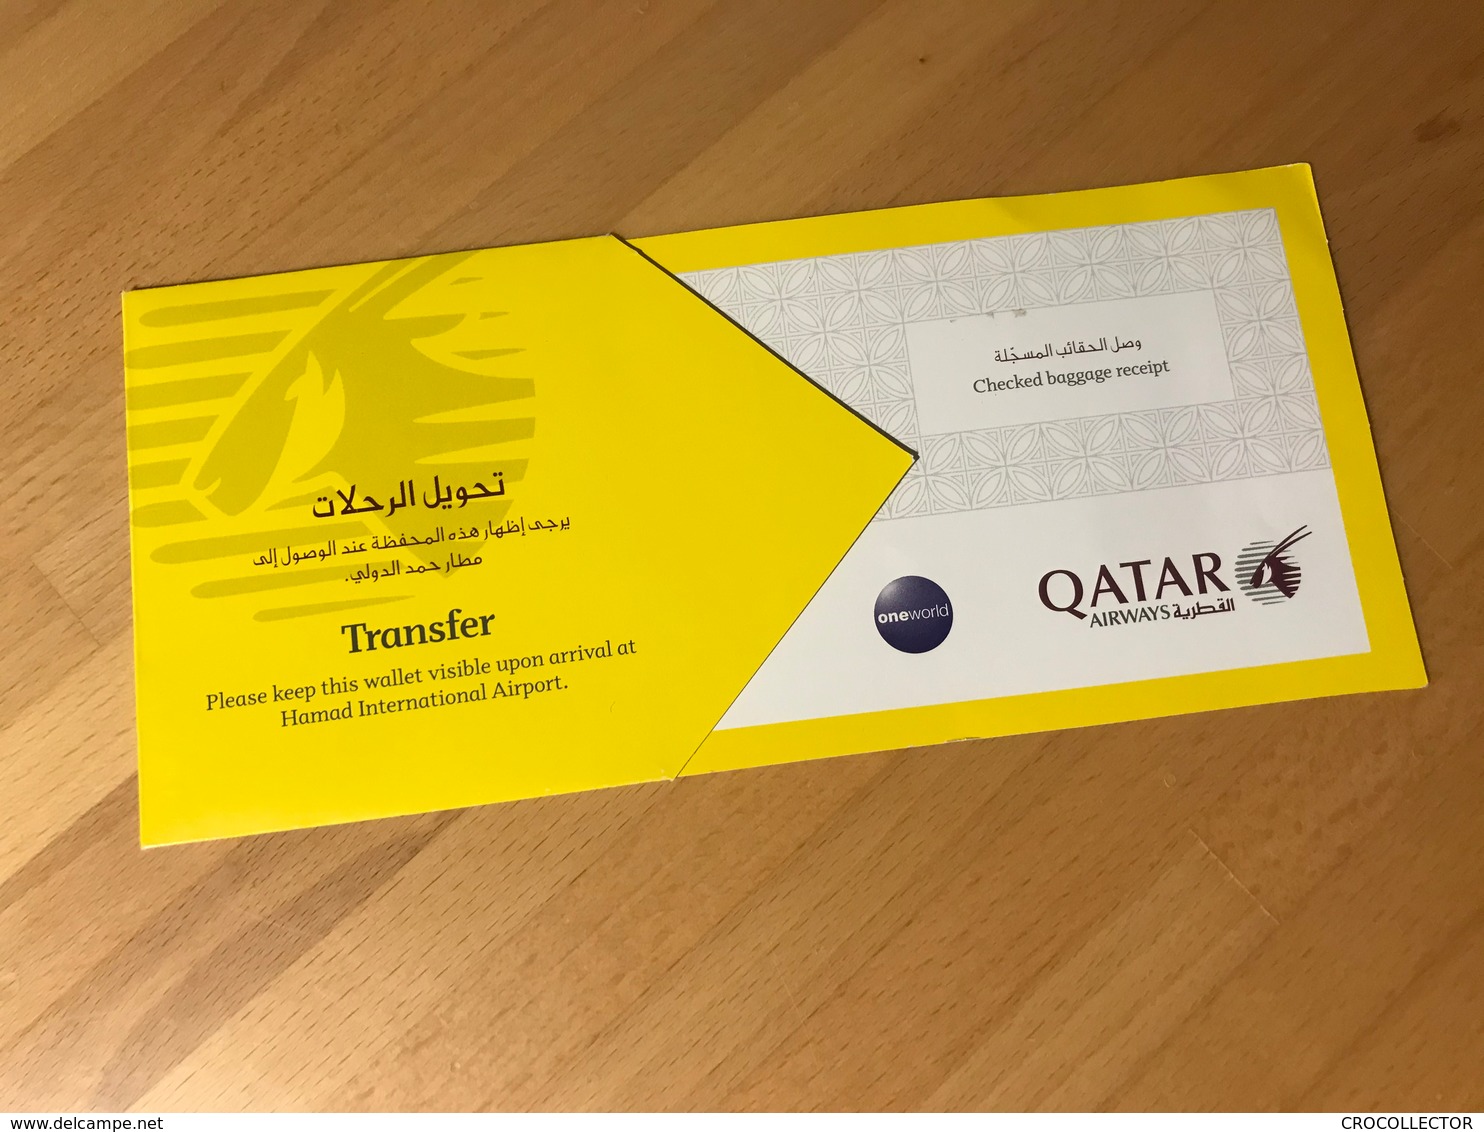 QATAR AIRWAYS ONE WORLD ECONOMY CLASS BOARDING PASS YELLOW JACKET AT HAMAD INTERNATIONAL AIRPORT DOHA - Stationery